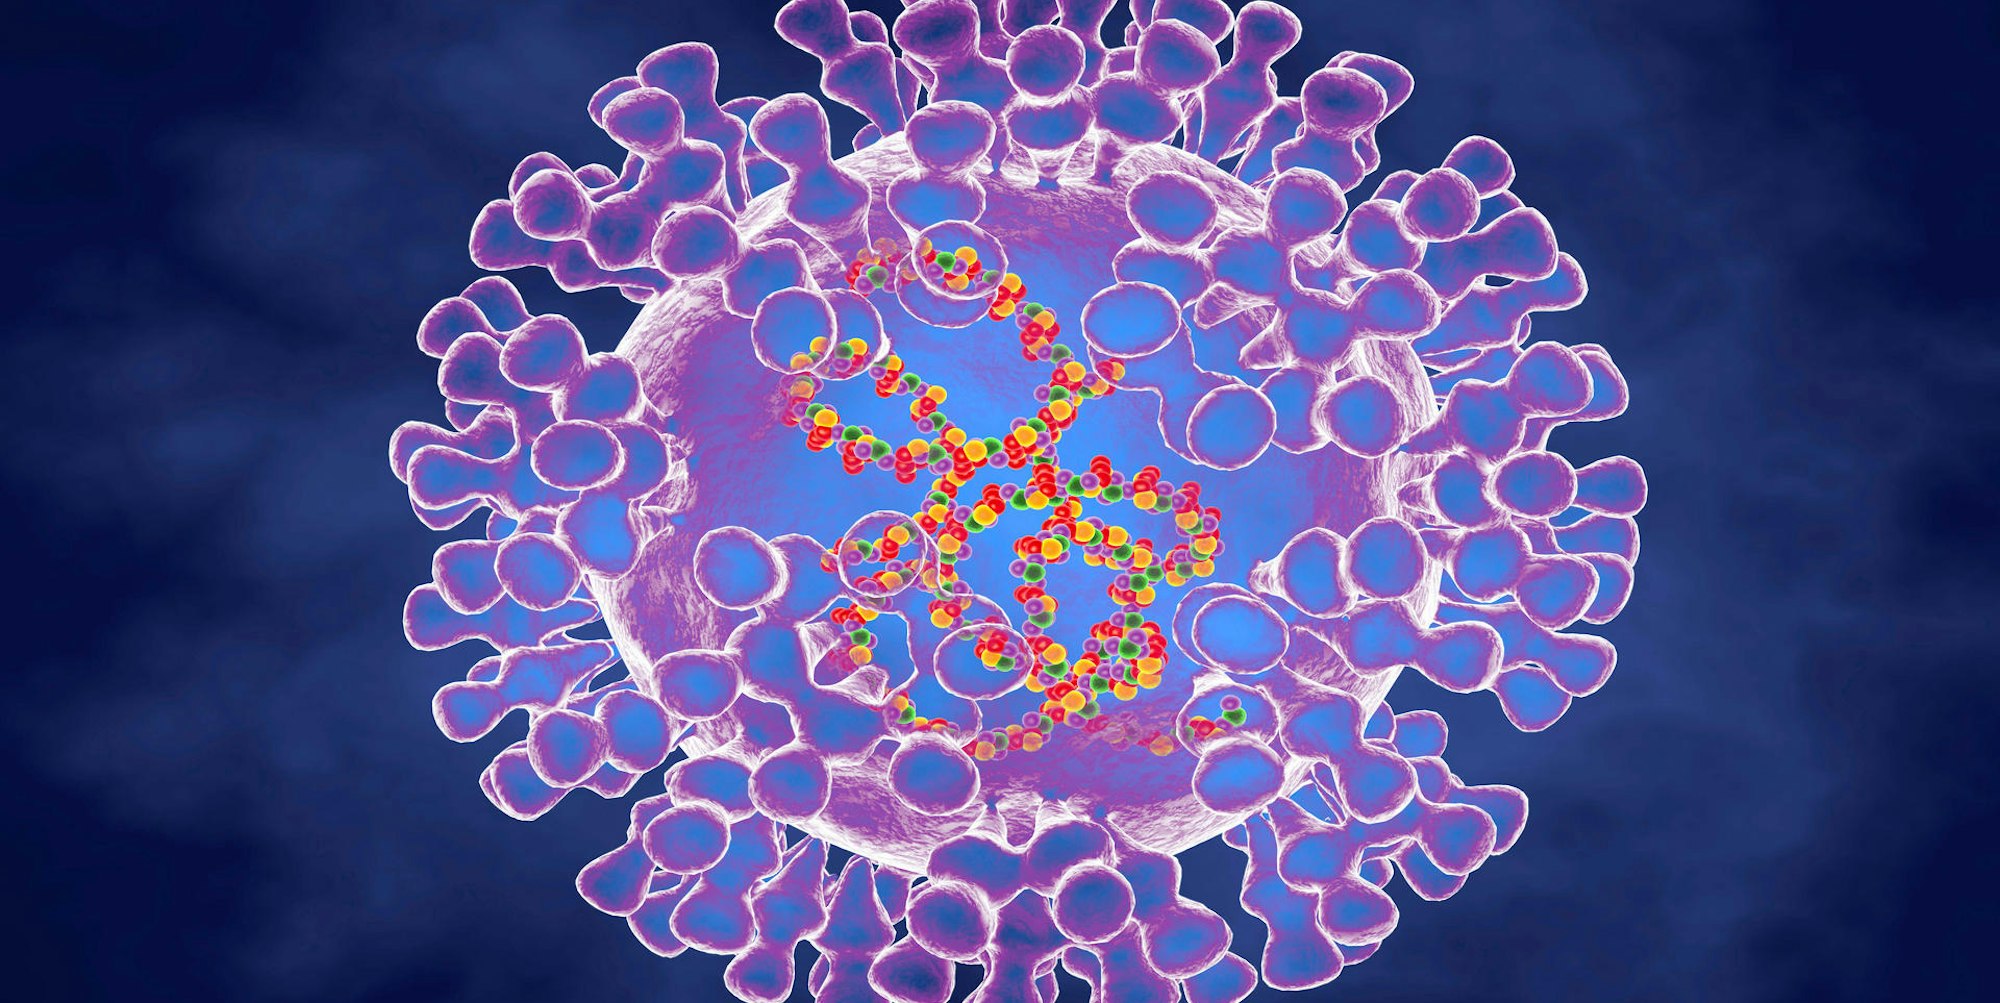 Affenpocken Virus Visualisierung IMAGO